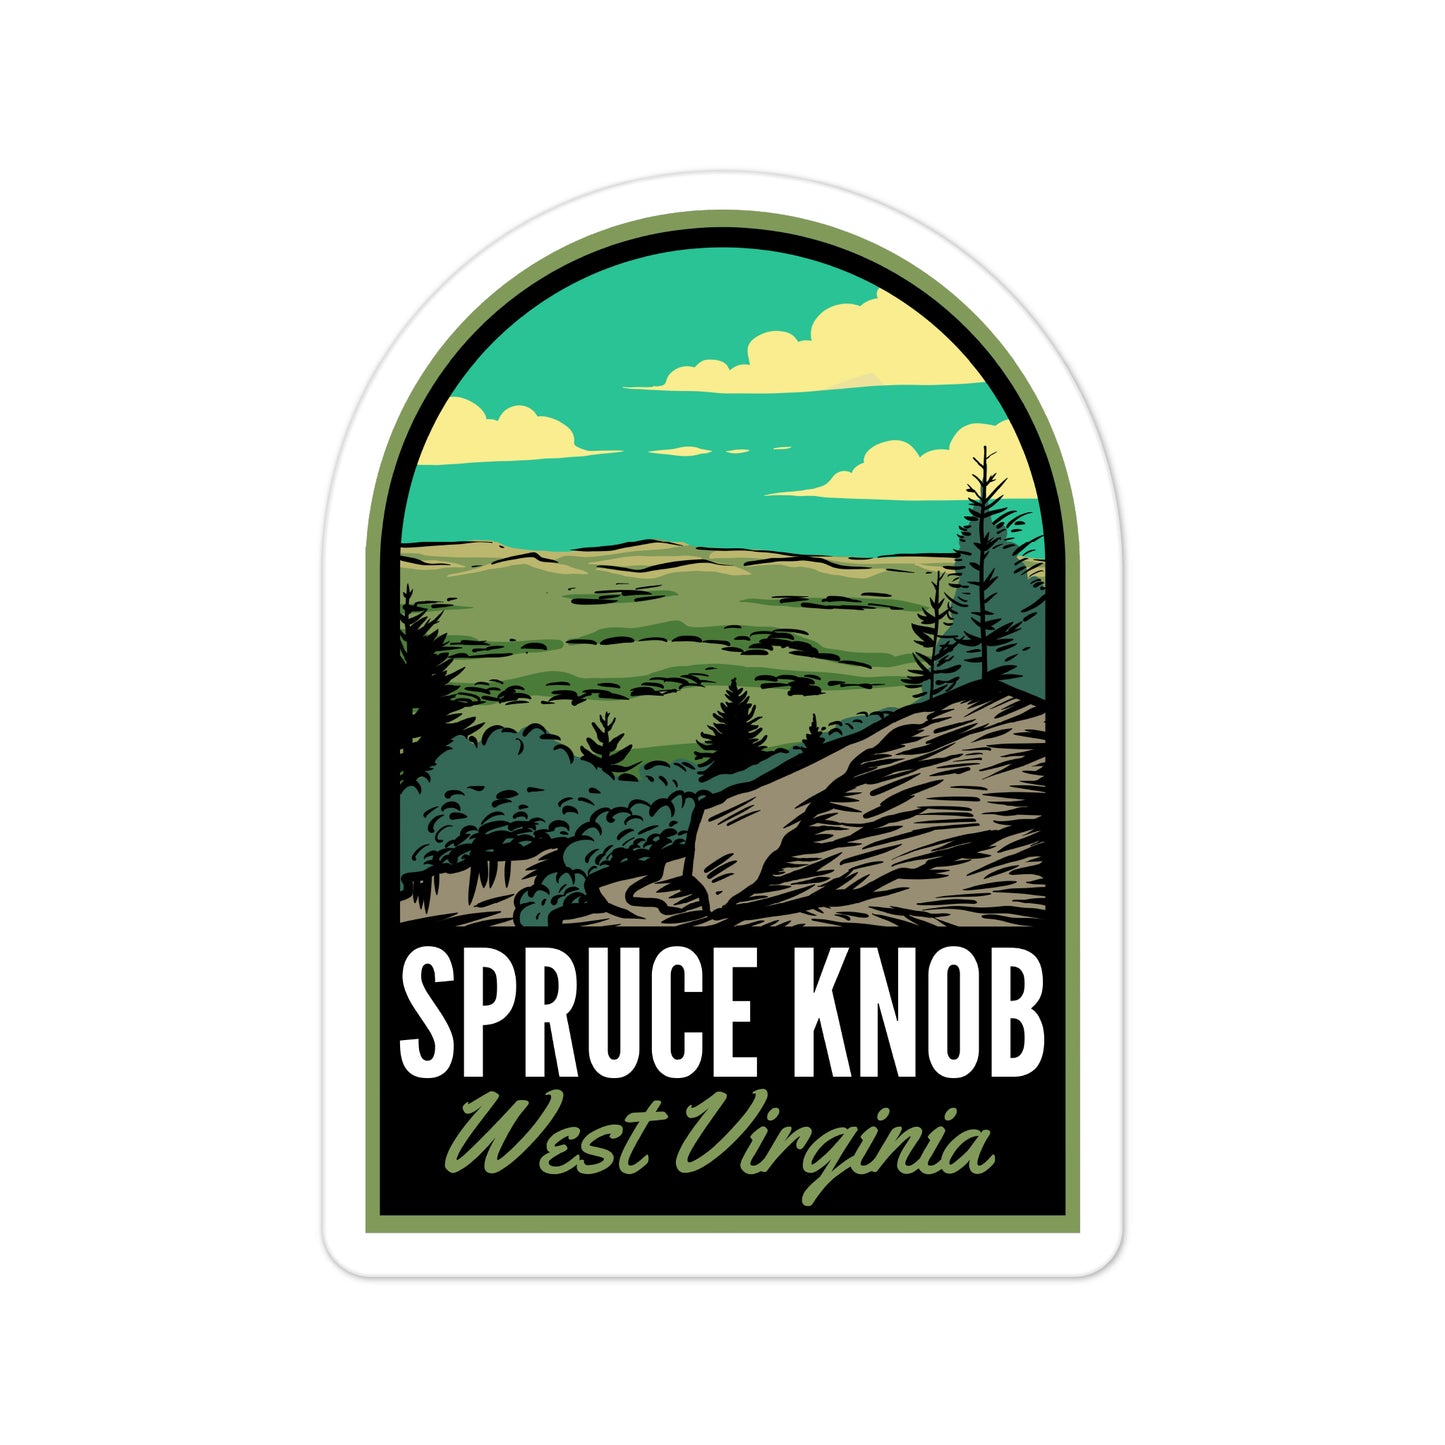 A sticker of Spruce Knob West Virginia